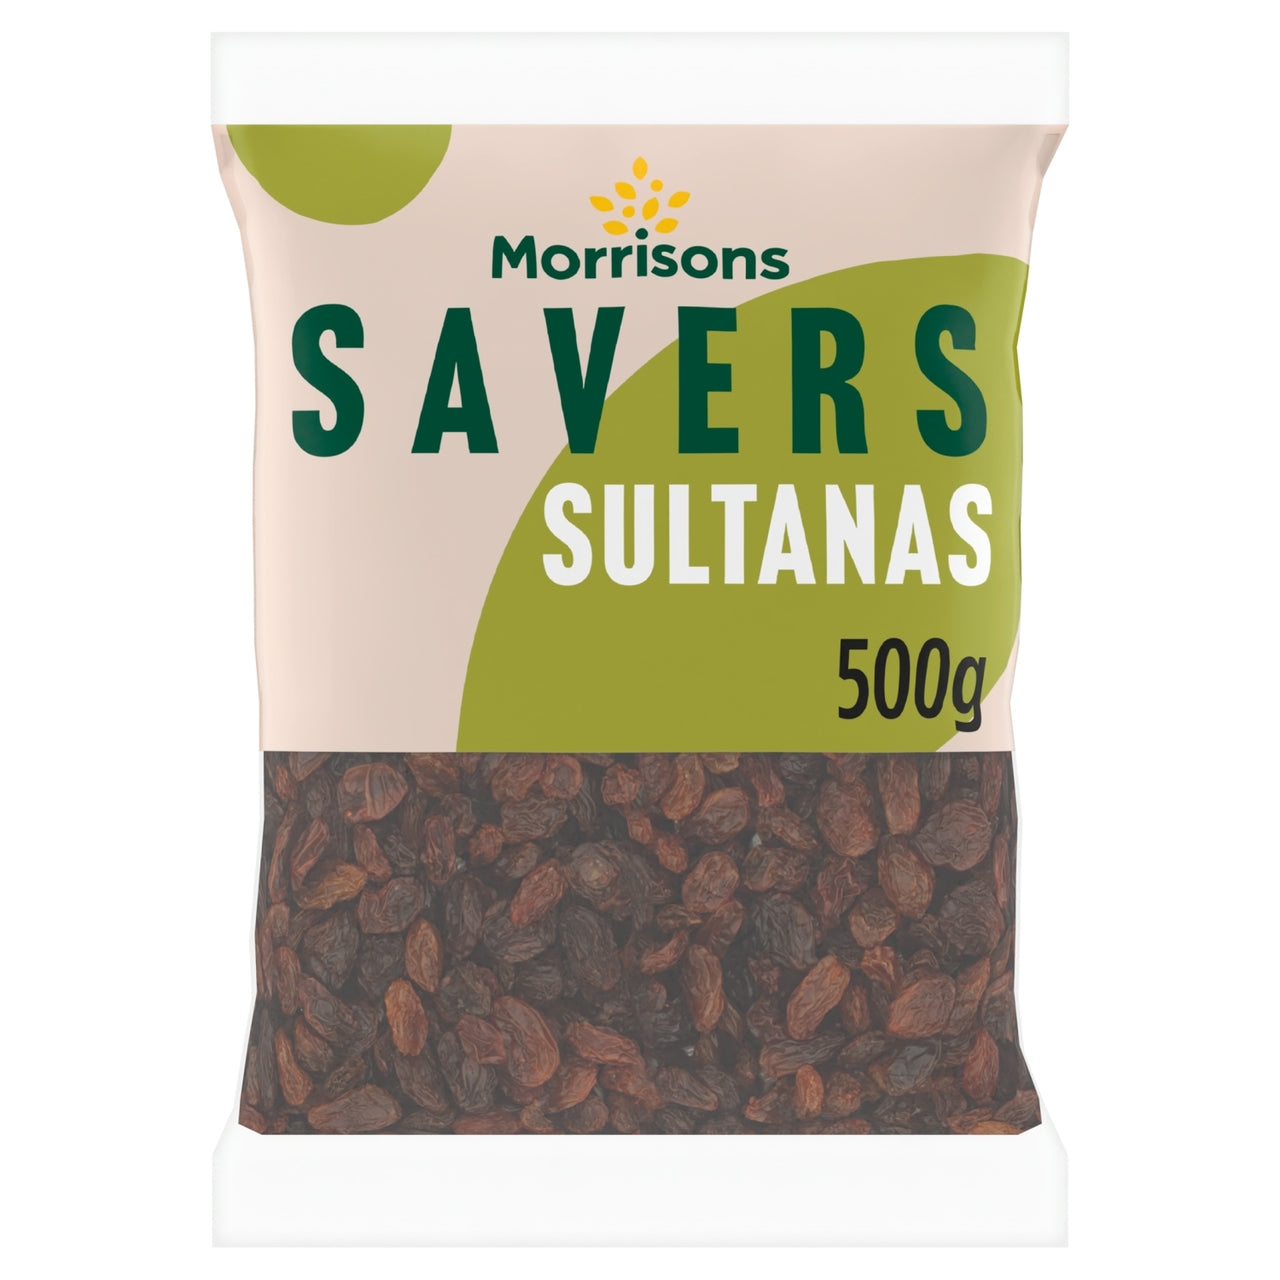 Morrisons Savers Sultanas 500g